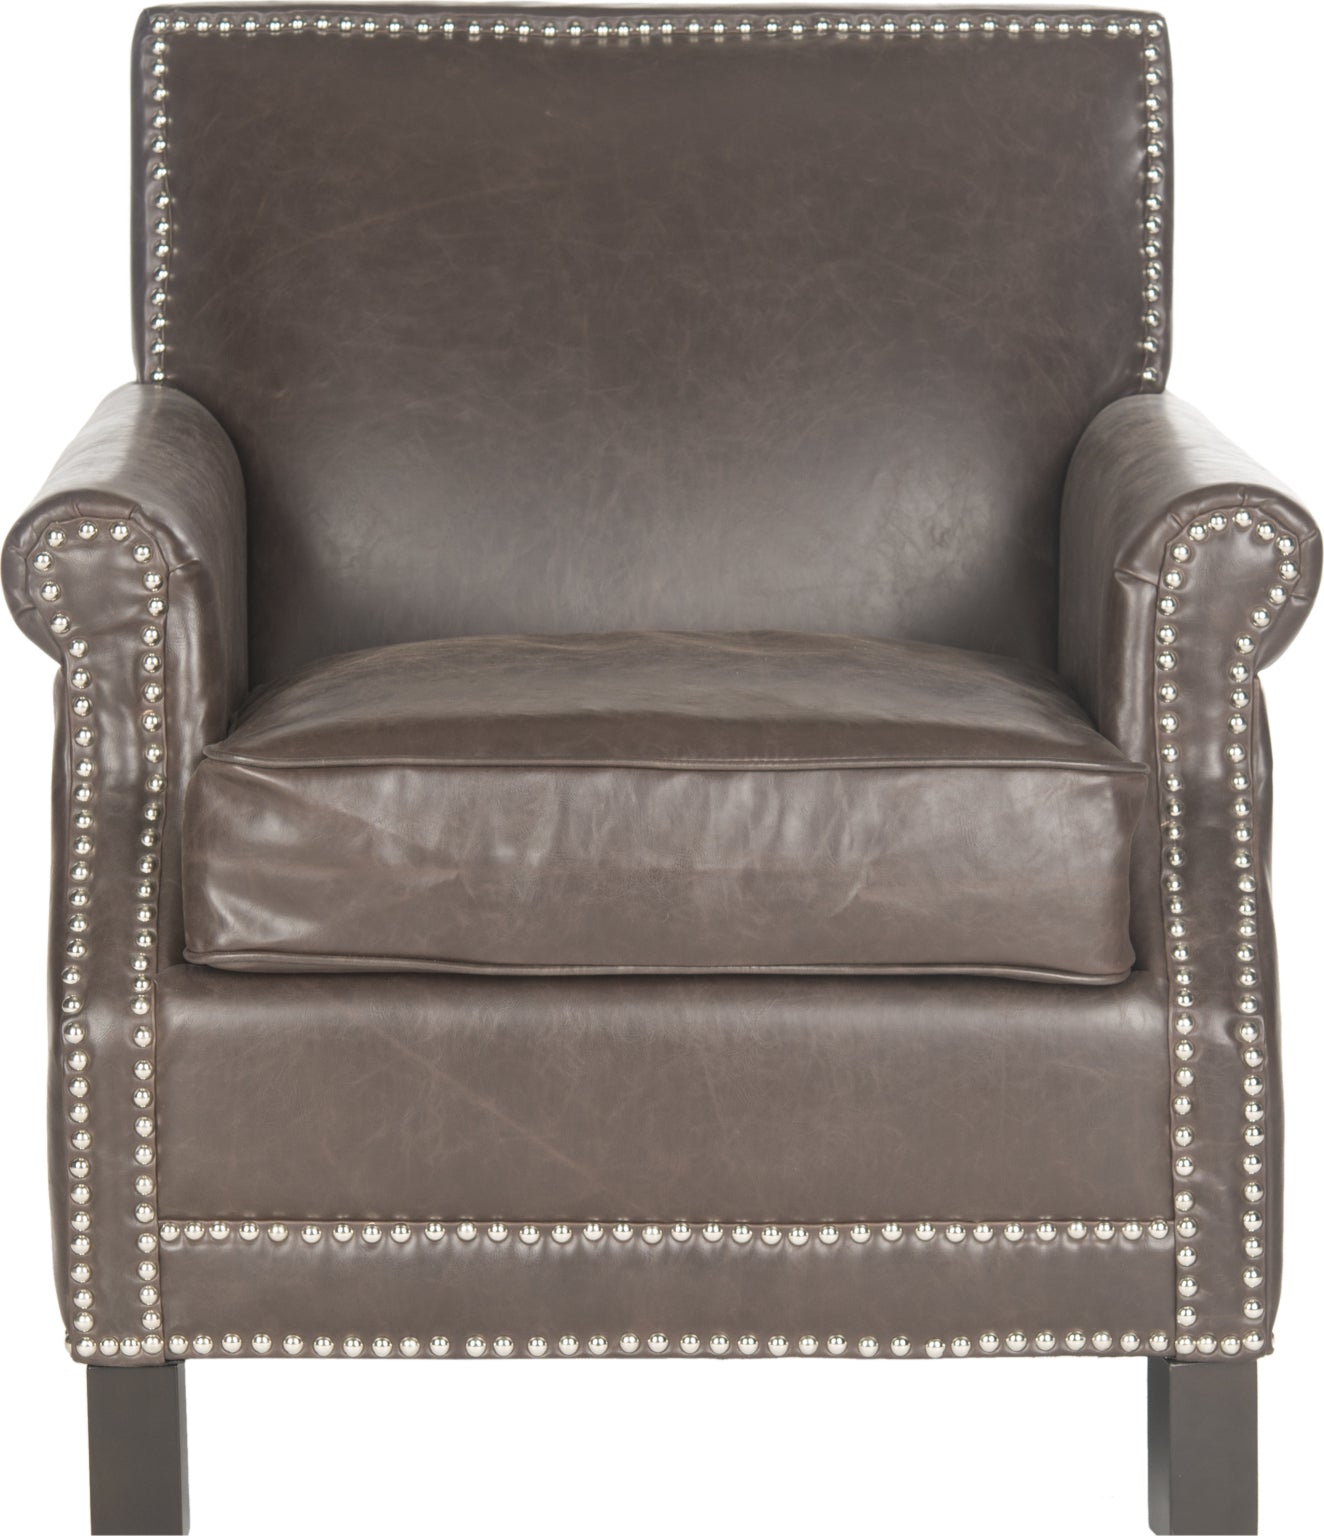 Safavieh Easton Club Chair-Silver Nail Heads Antique Brown and Espresso Furniture main image